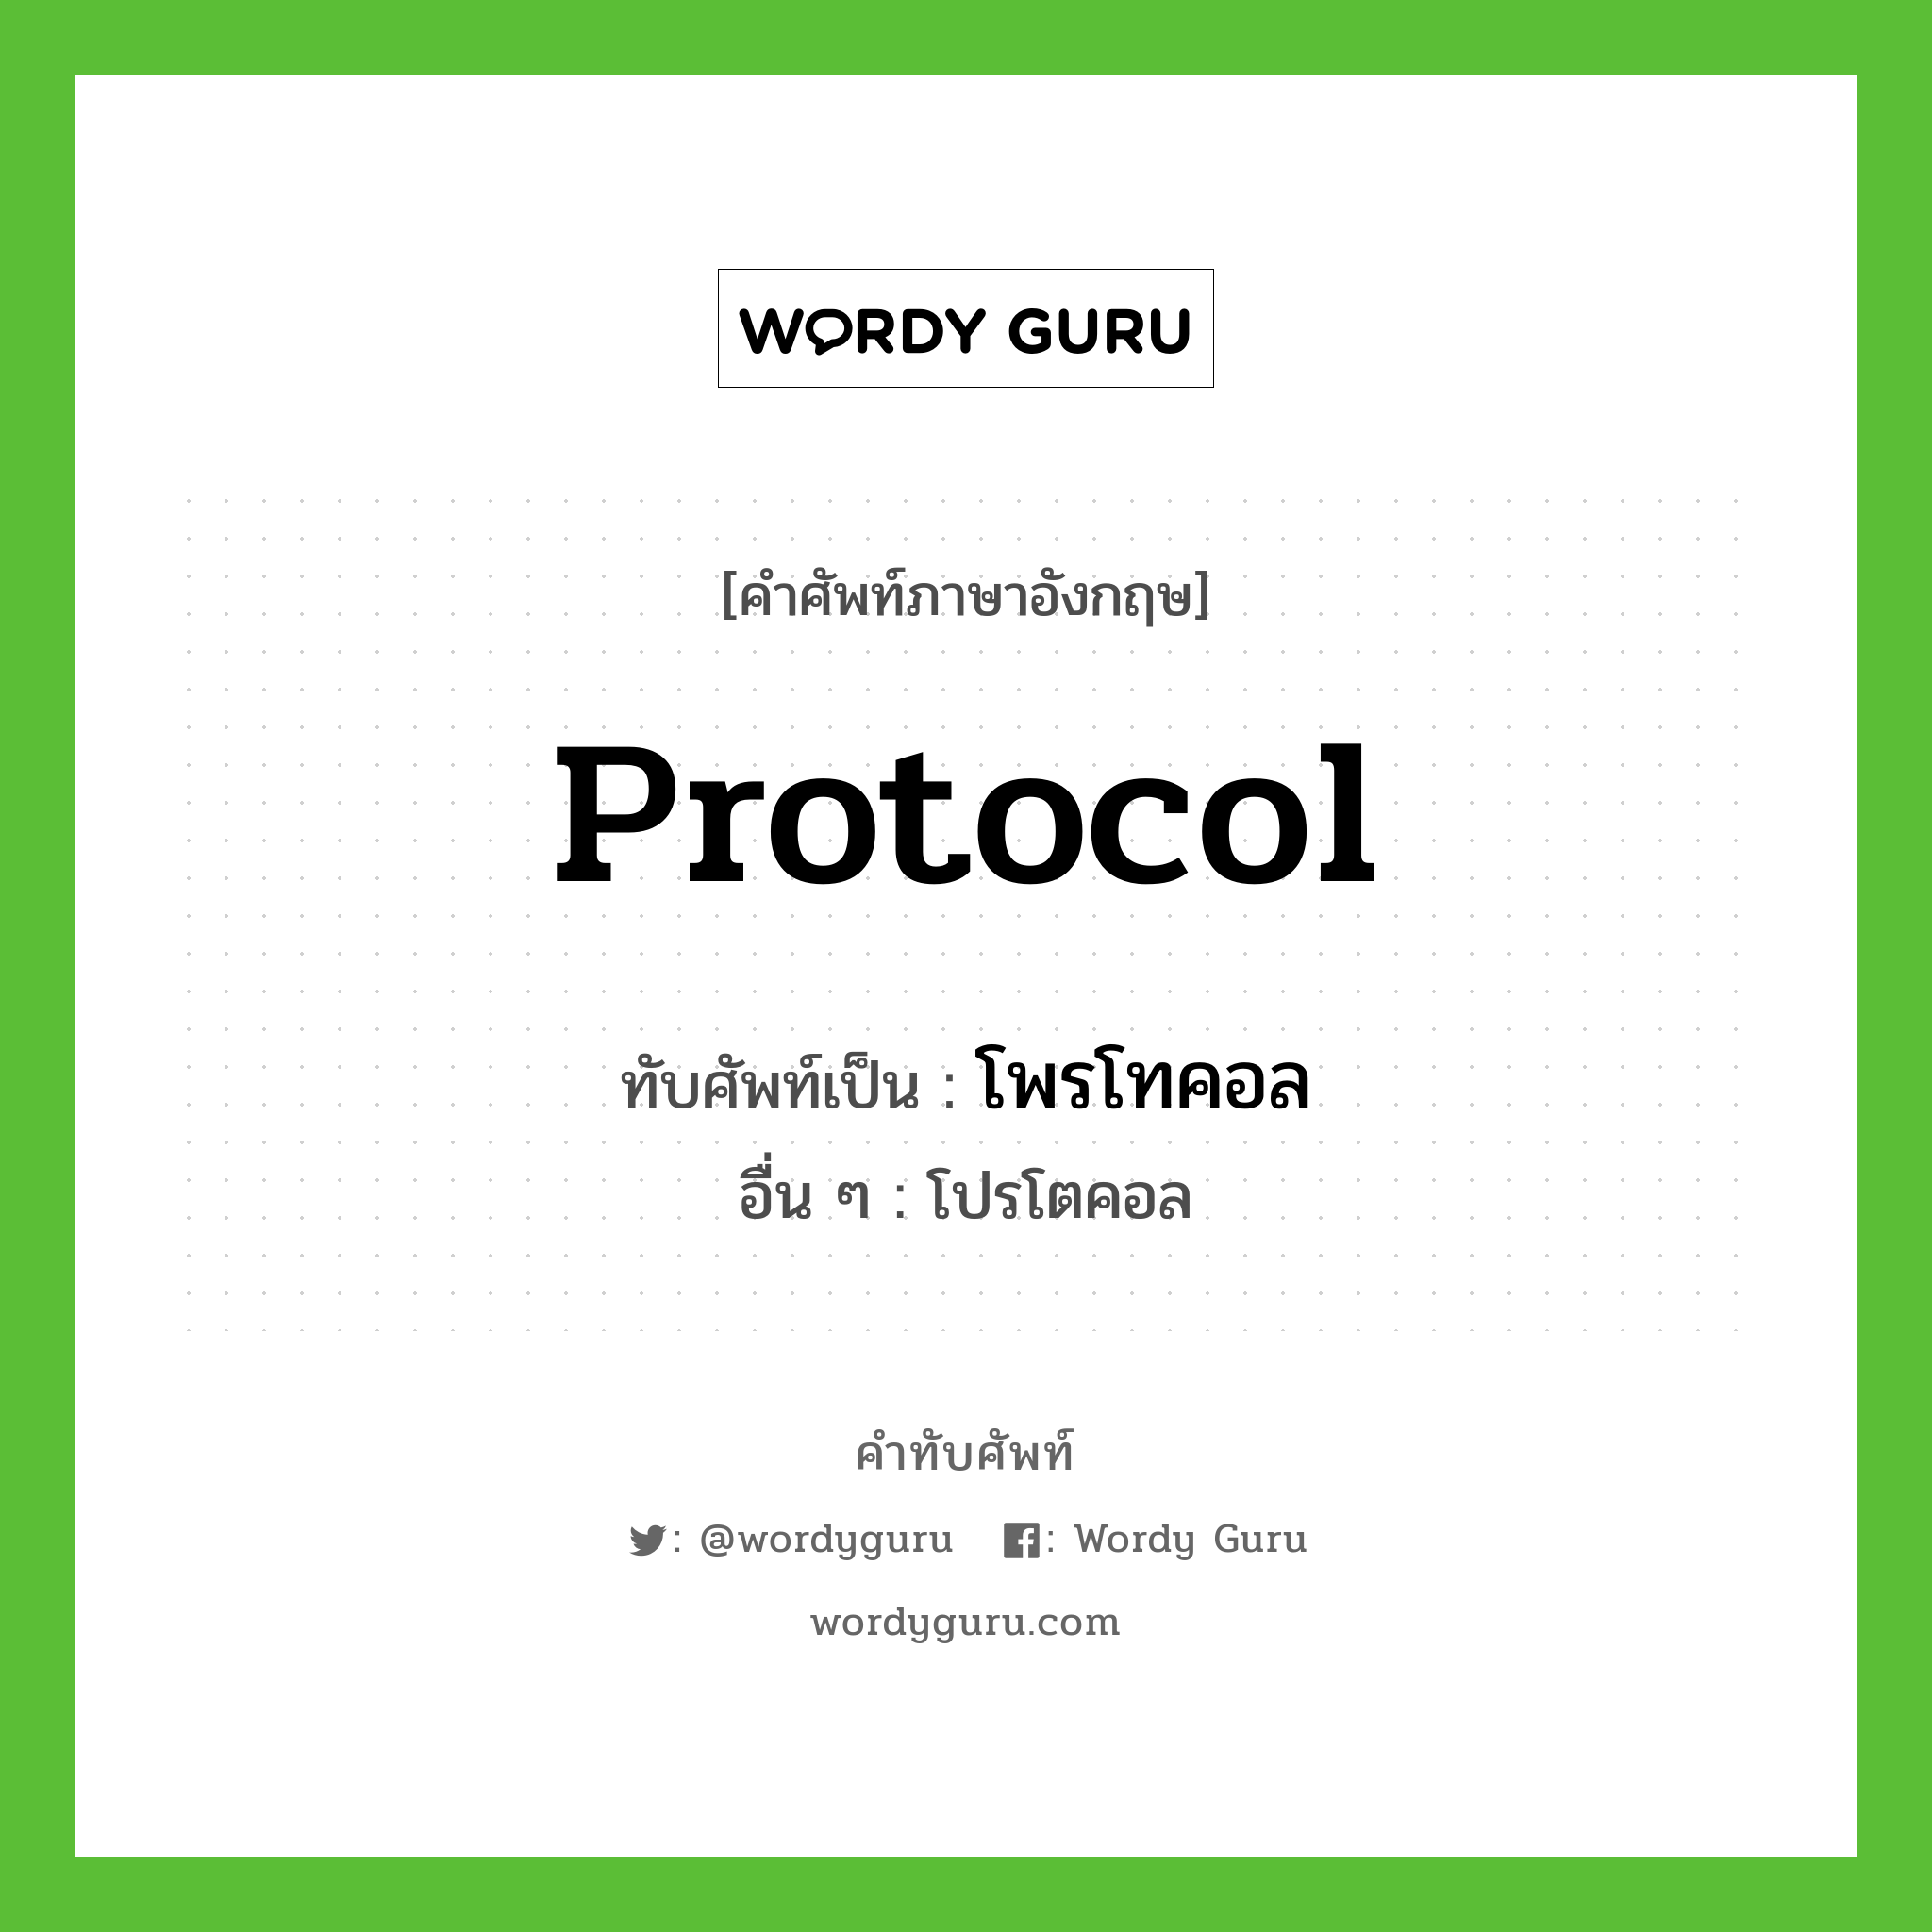 protocol เขียนเป็นคำไทยว่าอะไร?, คำศัพท์ภาษาอังกฤษ protocol ทับศัพท์เป็น โพรโทคอล อื่น ๆ โปรโตคอล